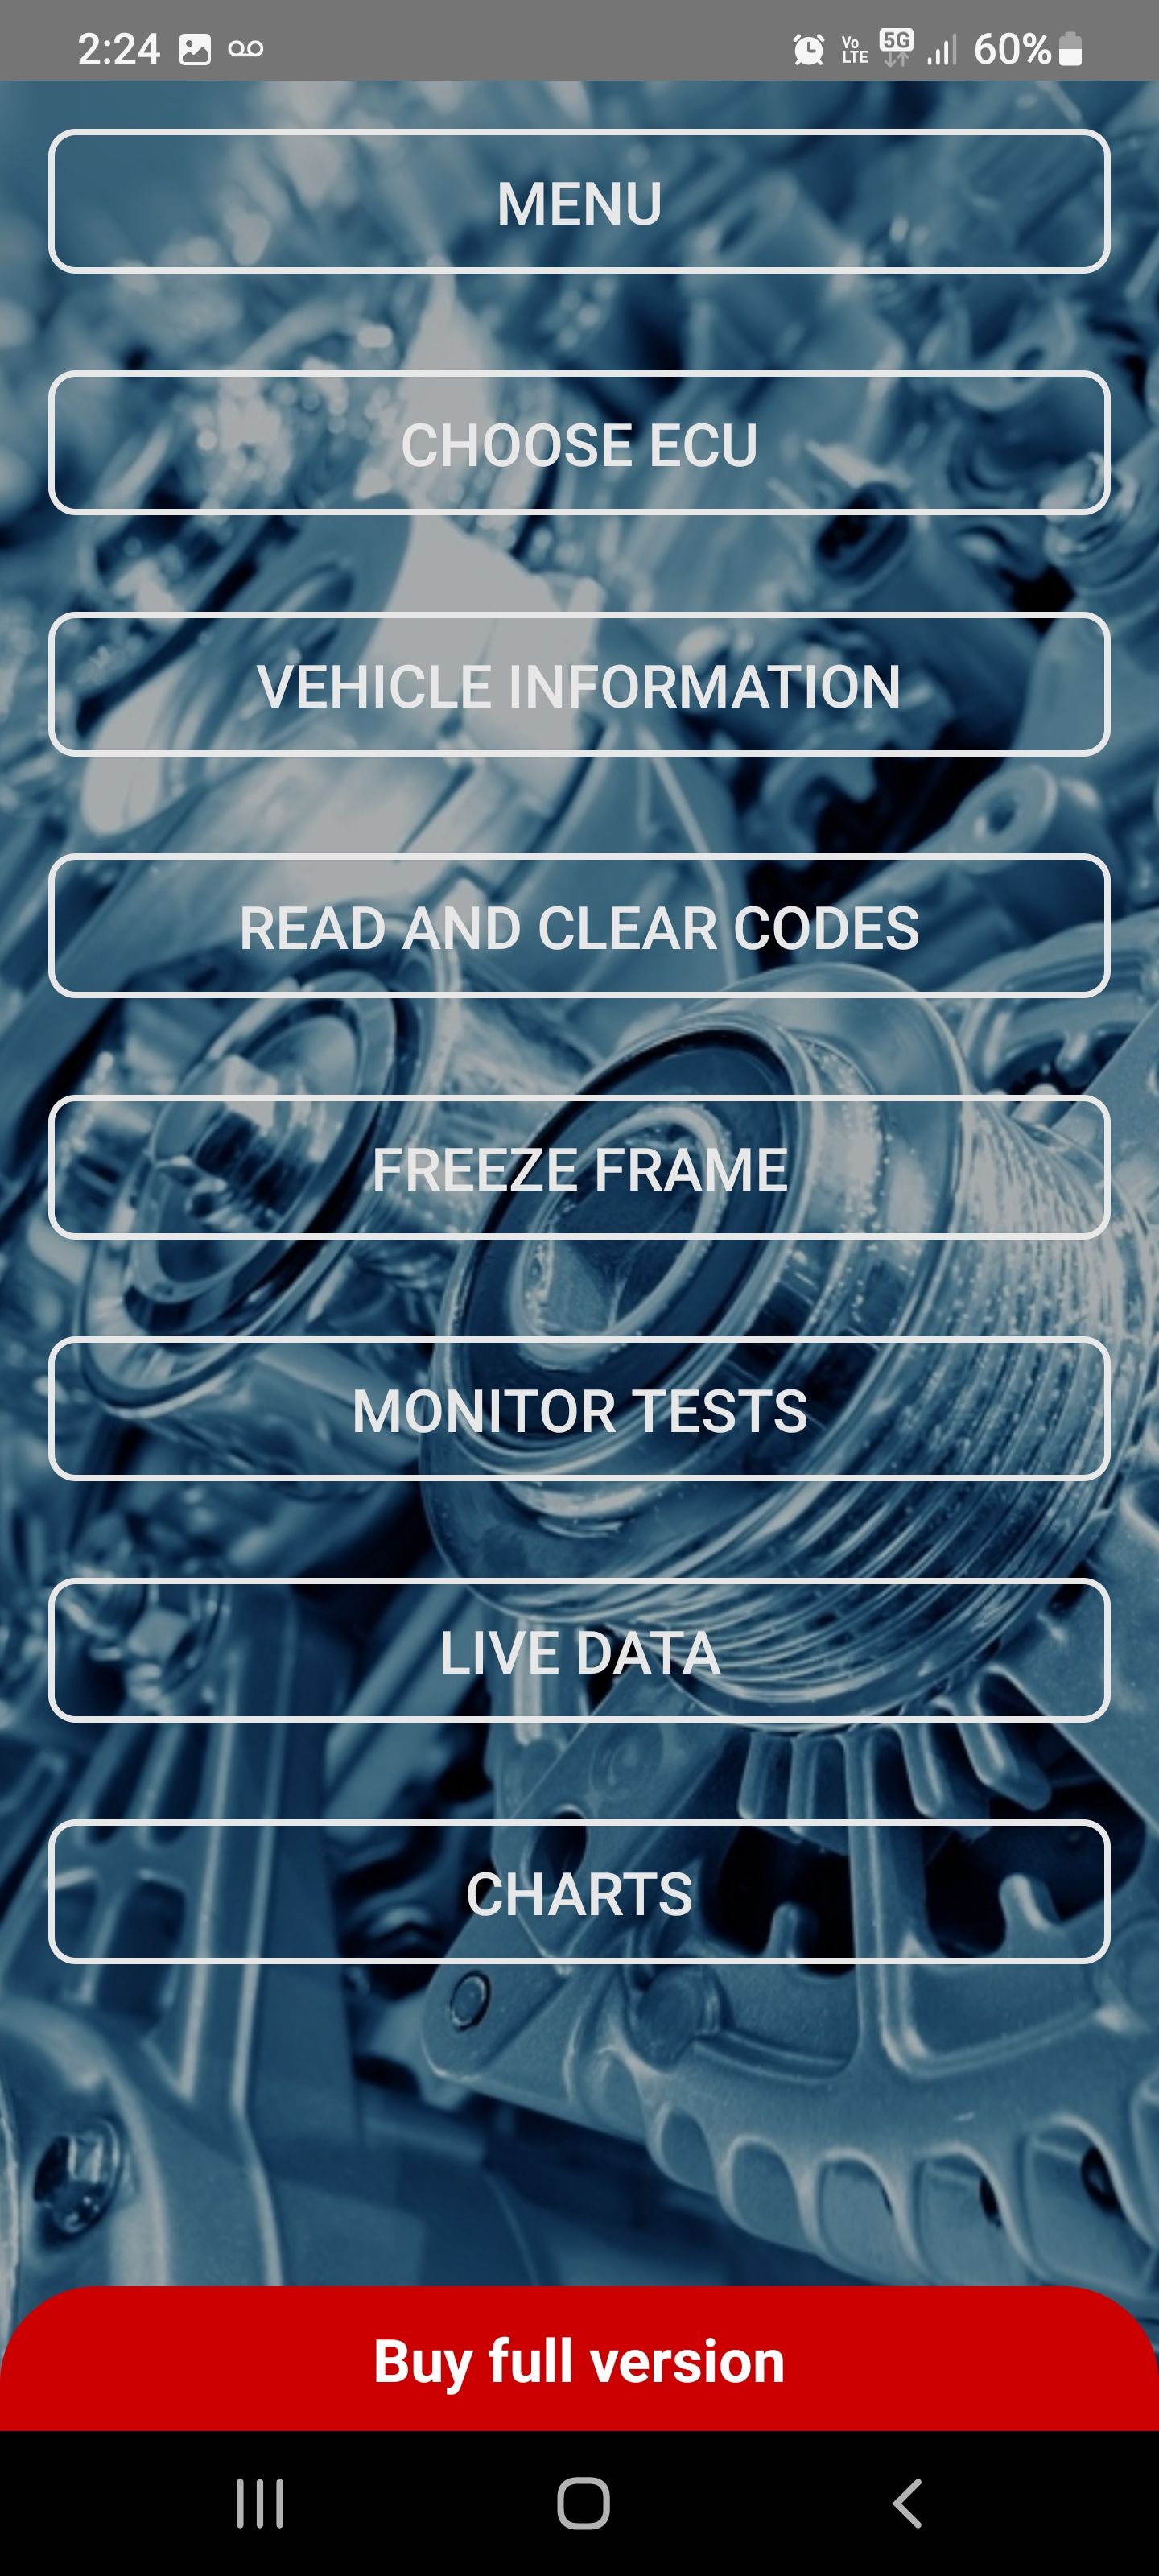 obd arny screenshot showing main app menu